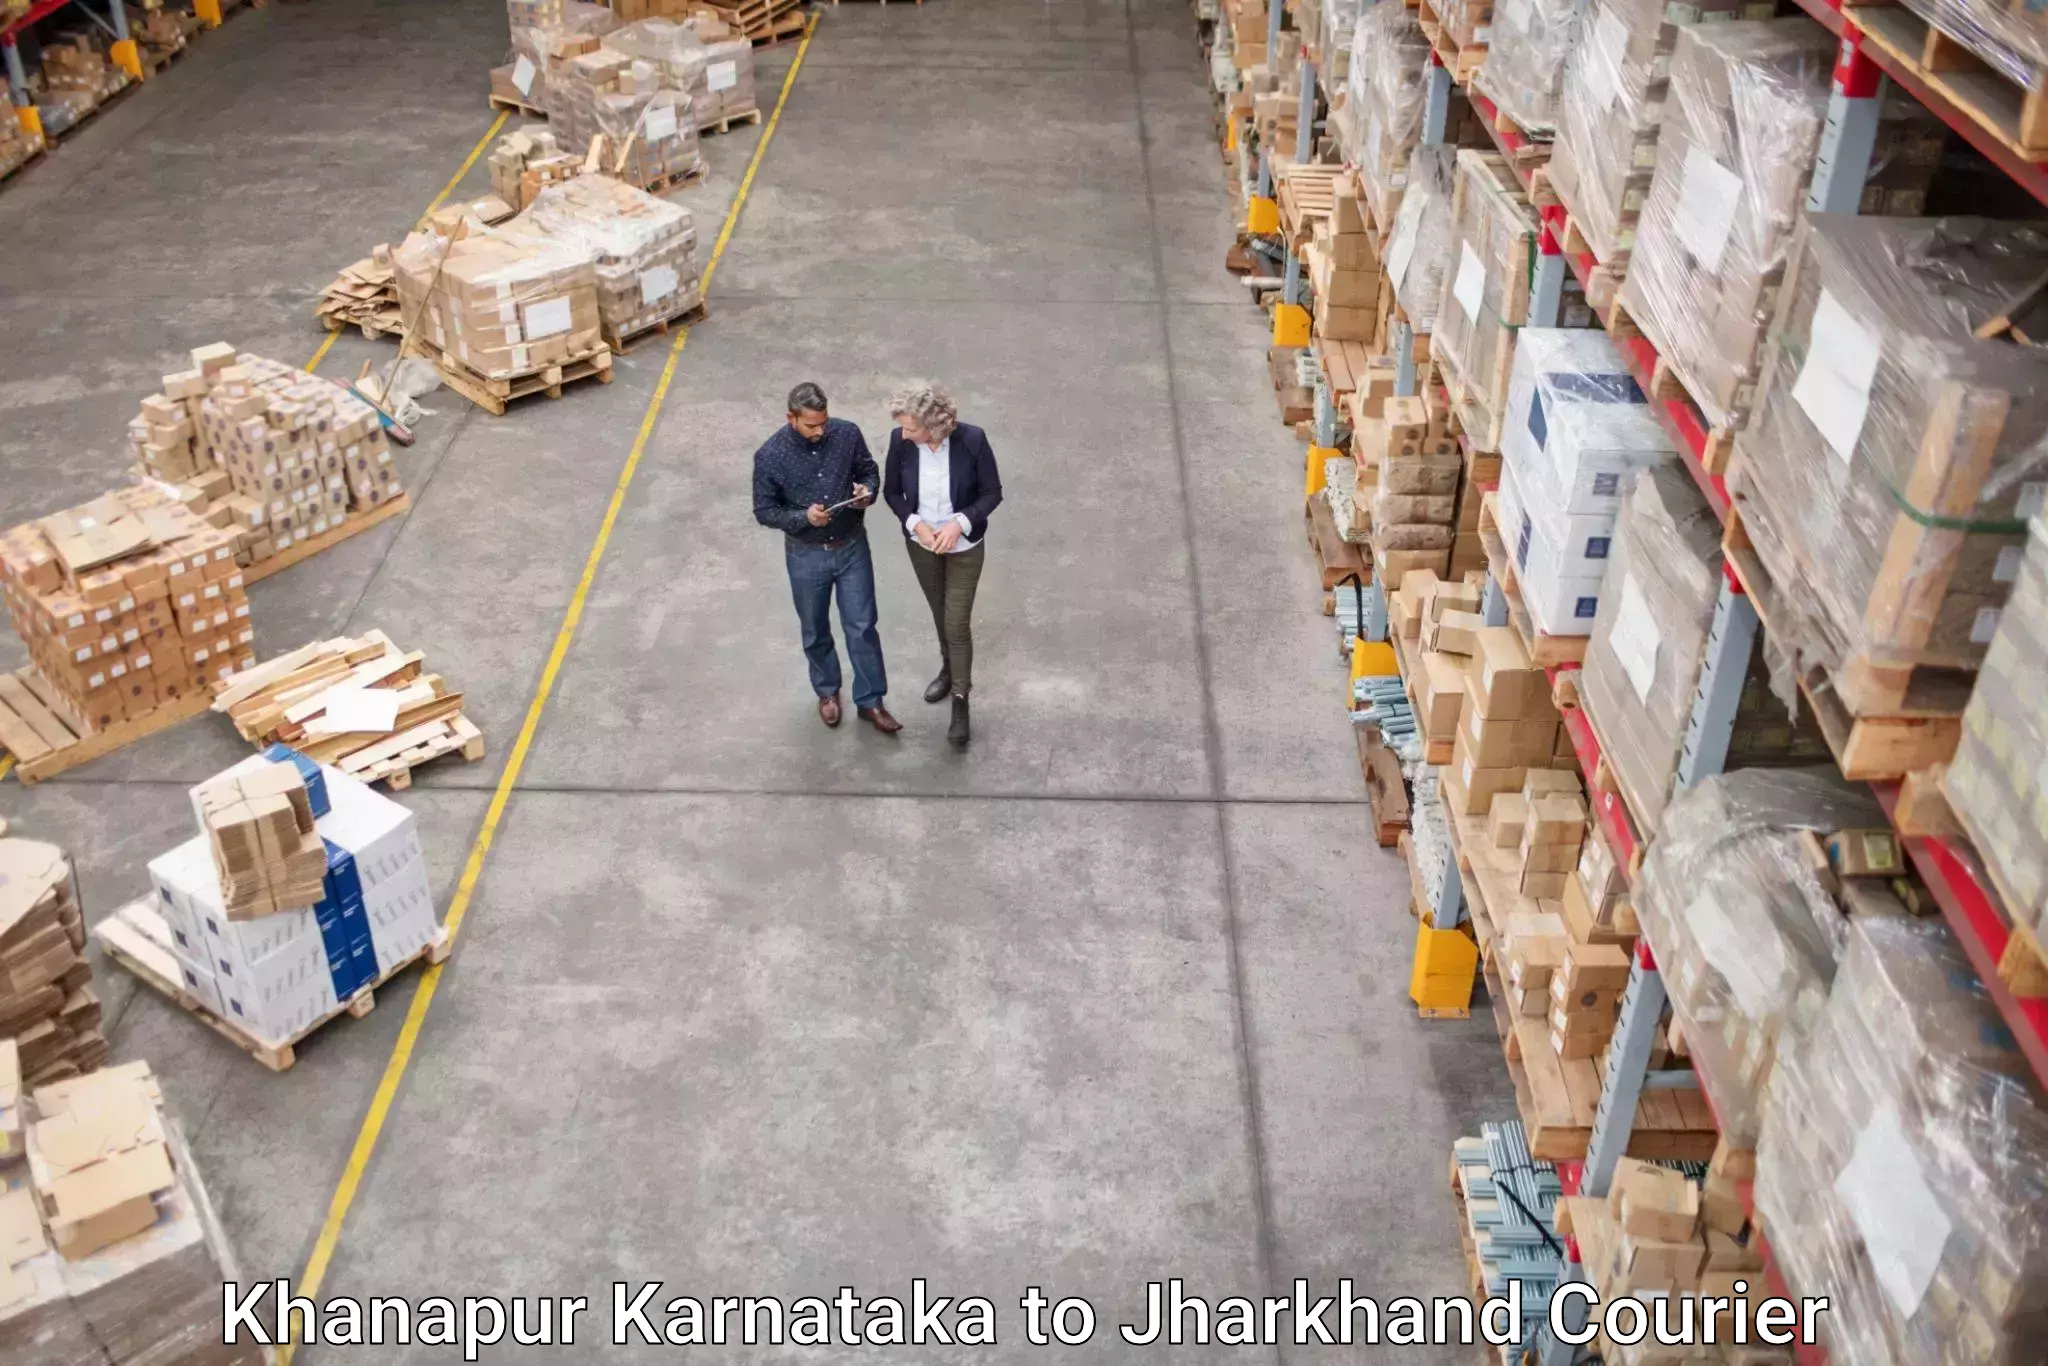 Courier service innovation Khanapur Karnataka to Chandwa